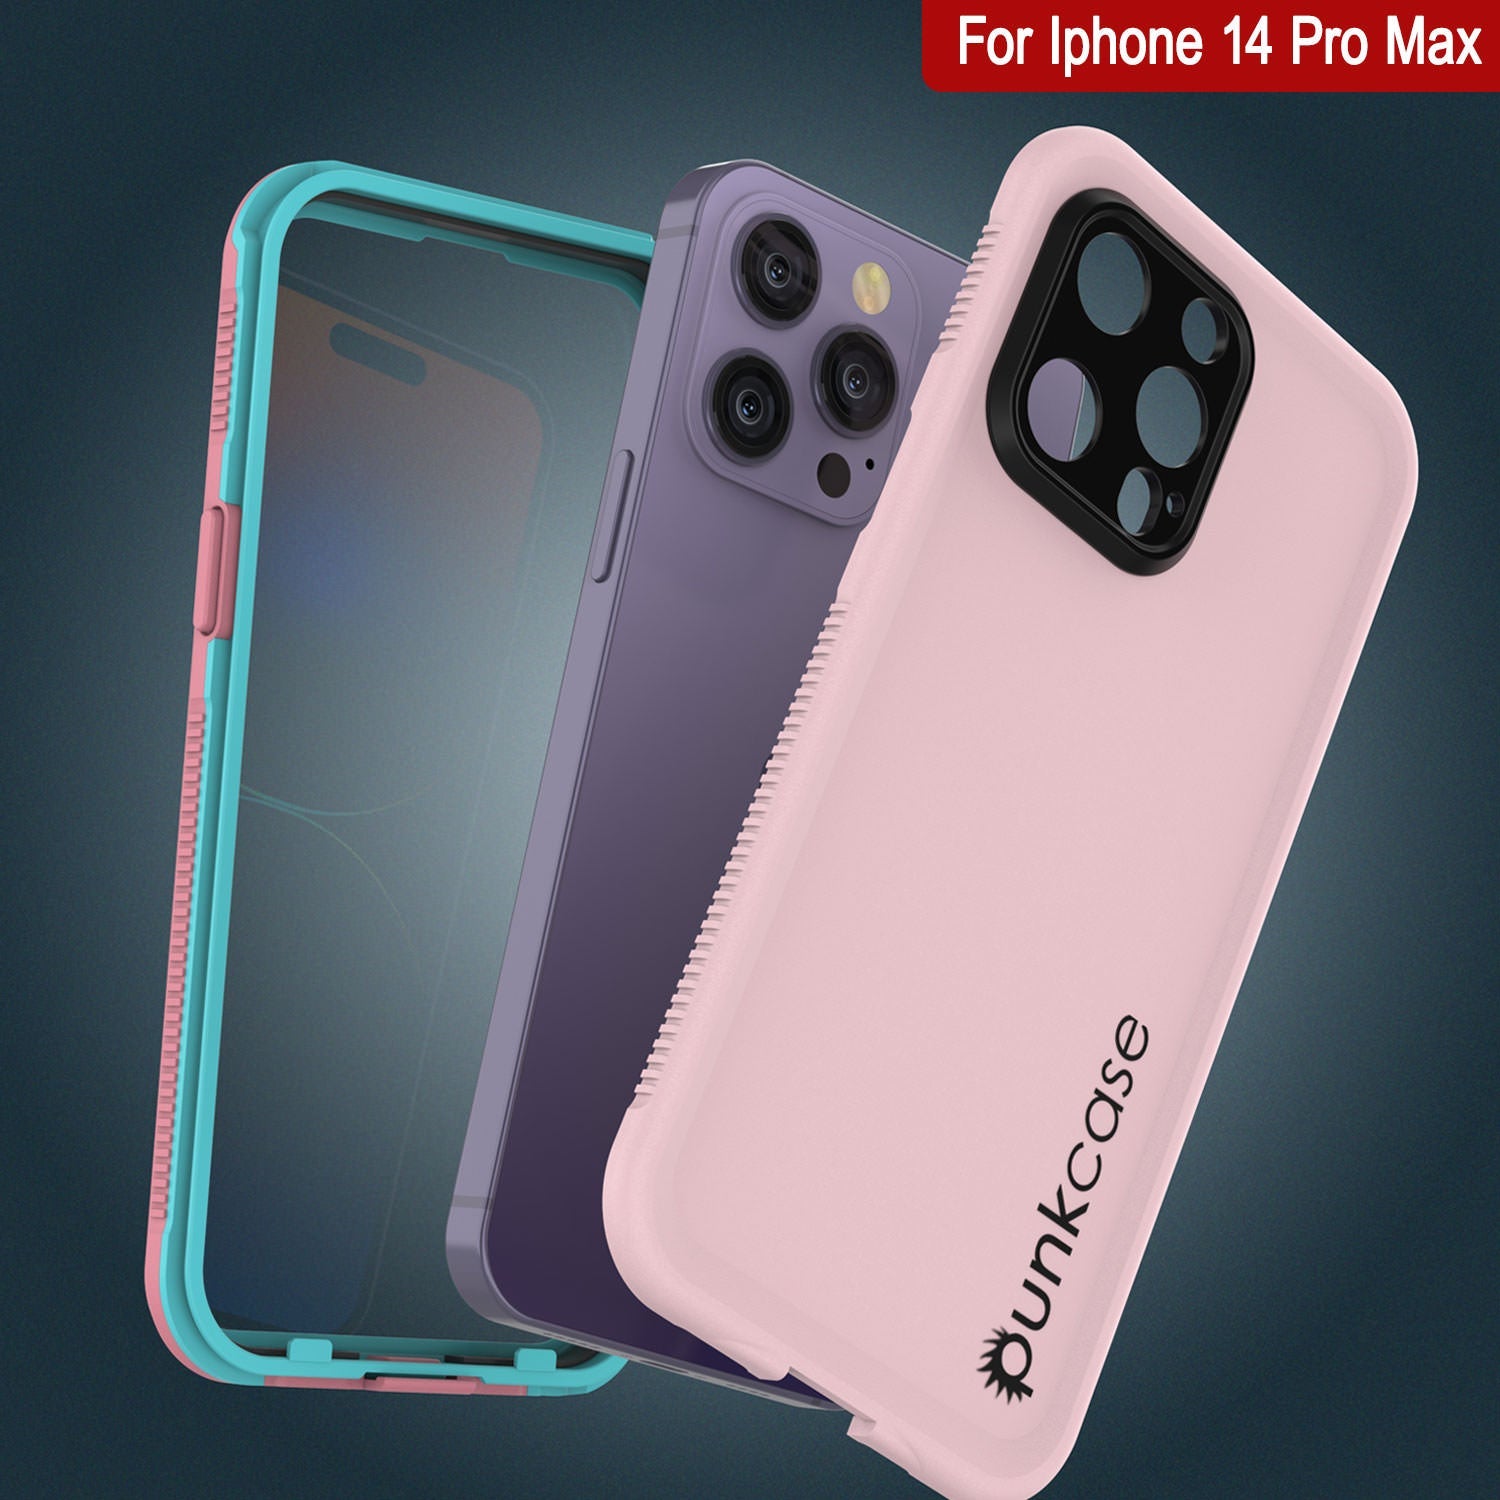 Punkcase iPhone 14 Pro Max Waterproof Case [Aqua Series] Armor Cover [Pink]